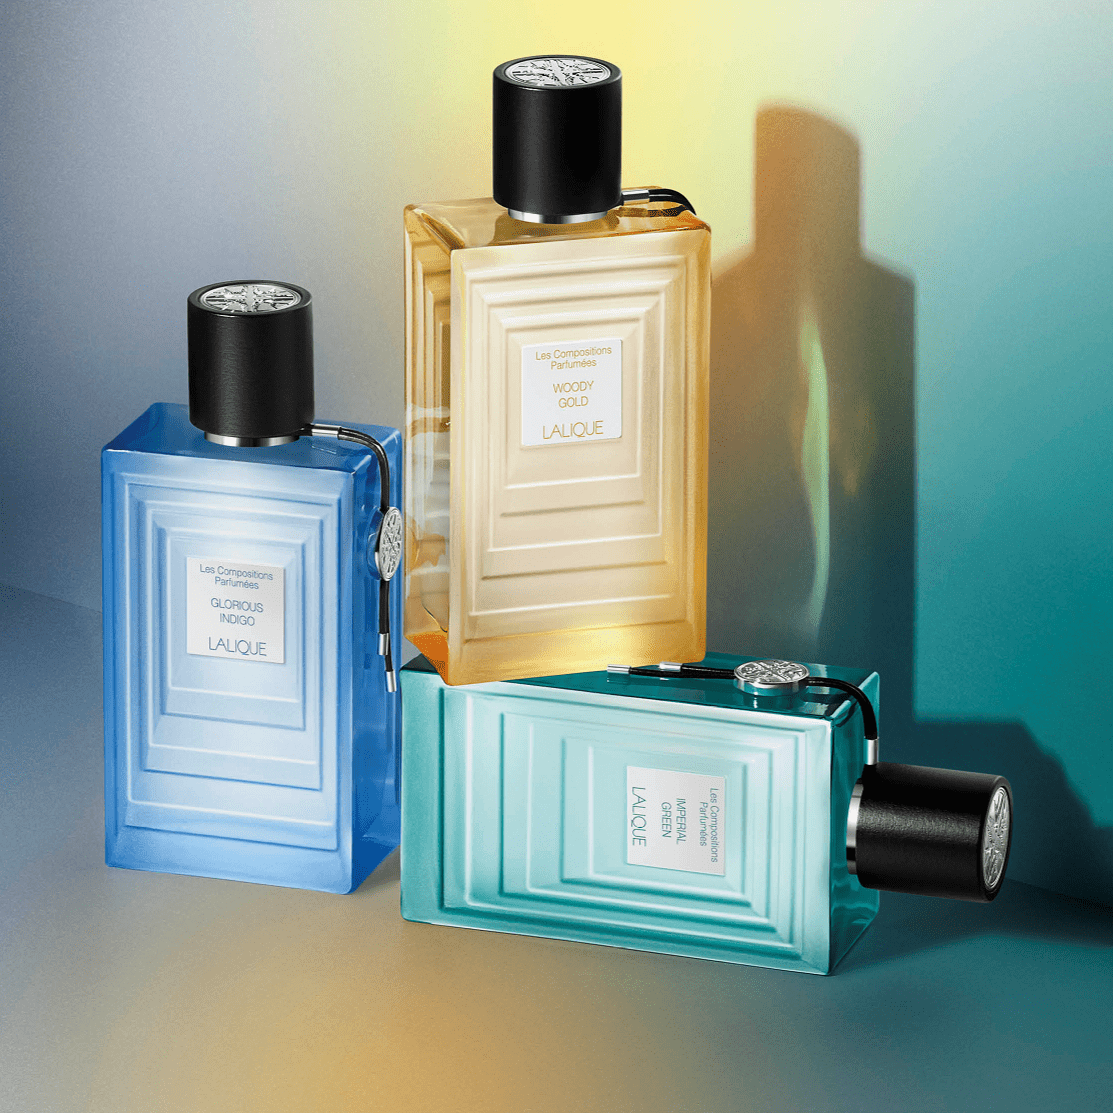 Lalique Les Compositions Parfumees Imperial Green EDP | My Perfume Shop Australia